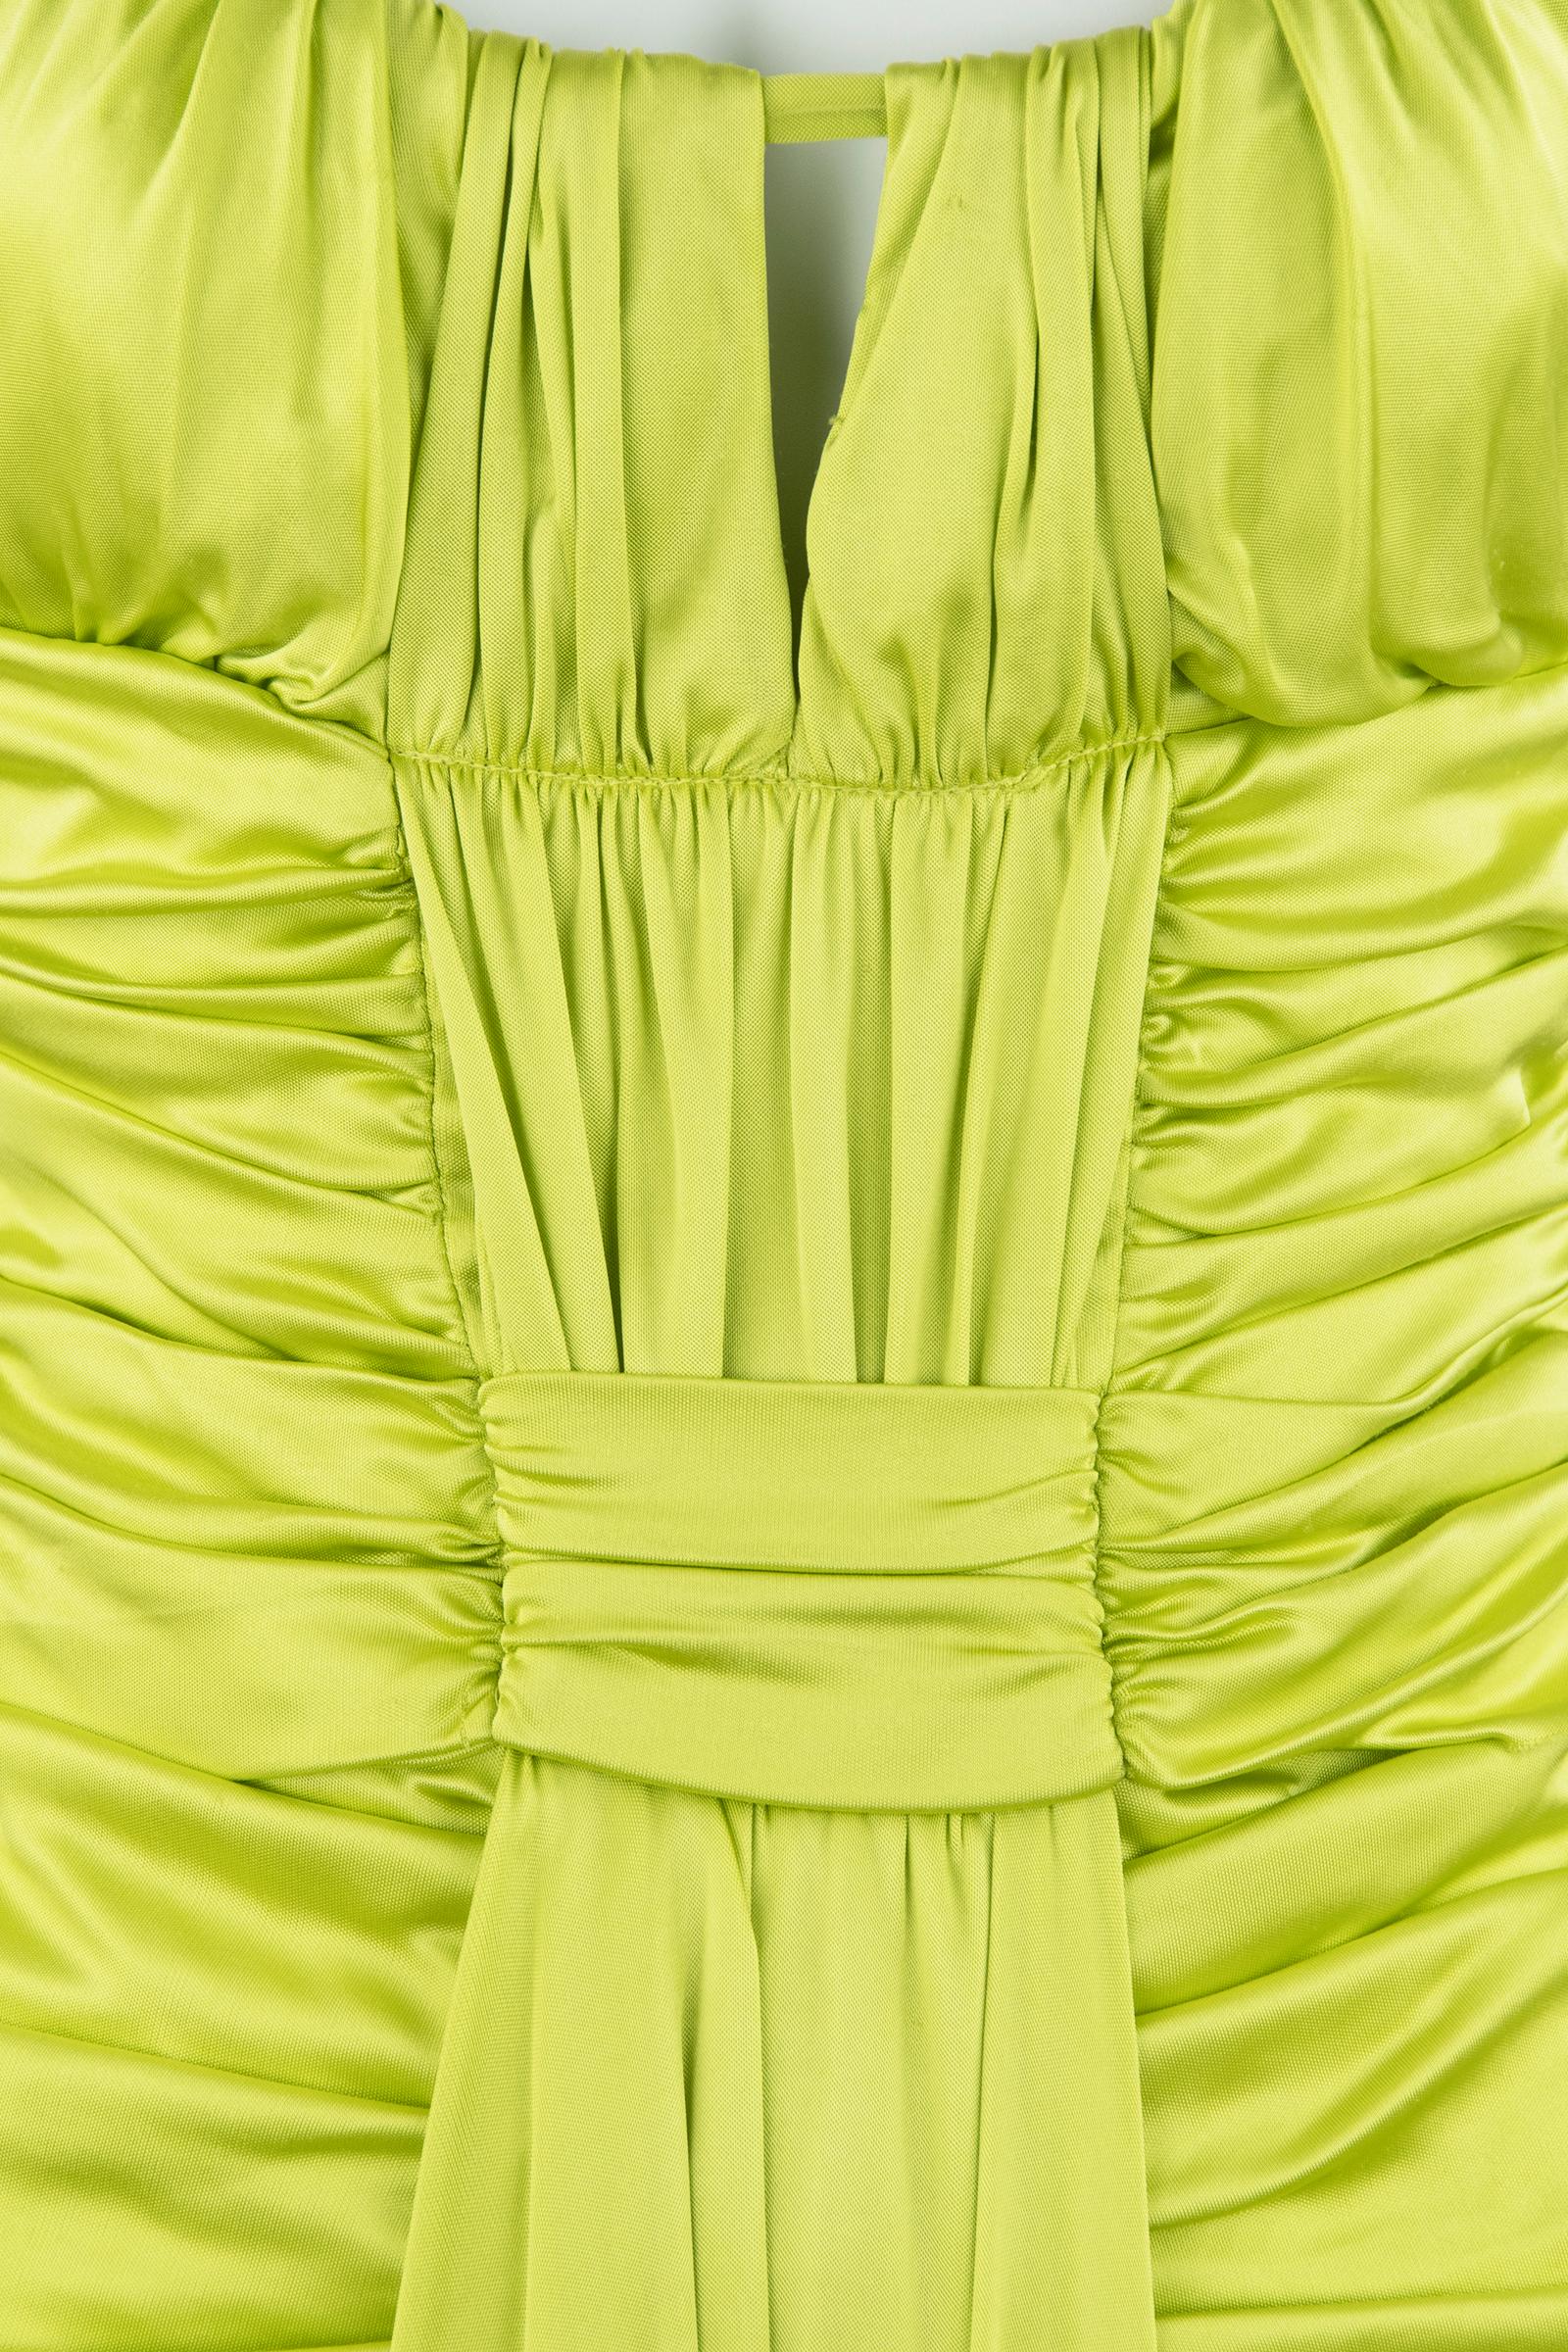 Women's Emanuel Ungaro Bright Green Silk Jersey Dress - Size IT 40 For Sale